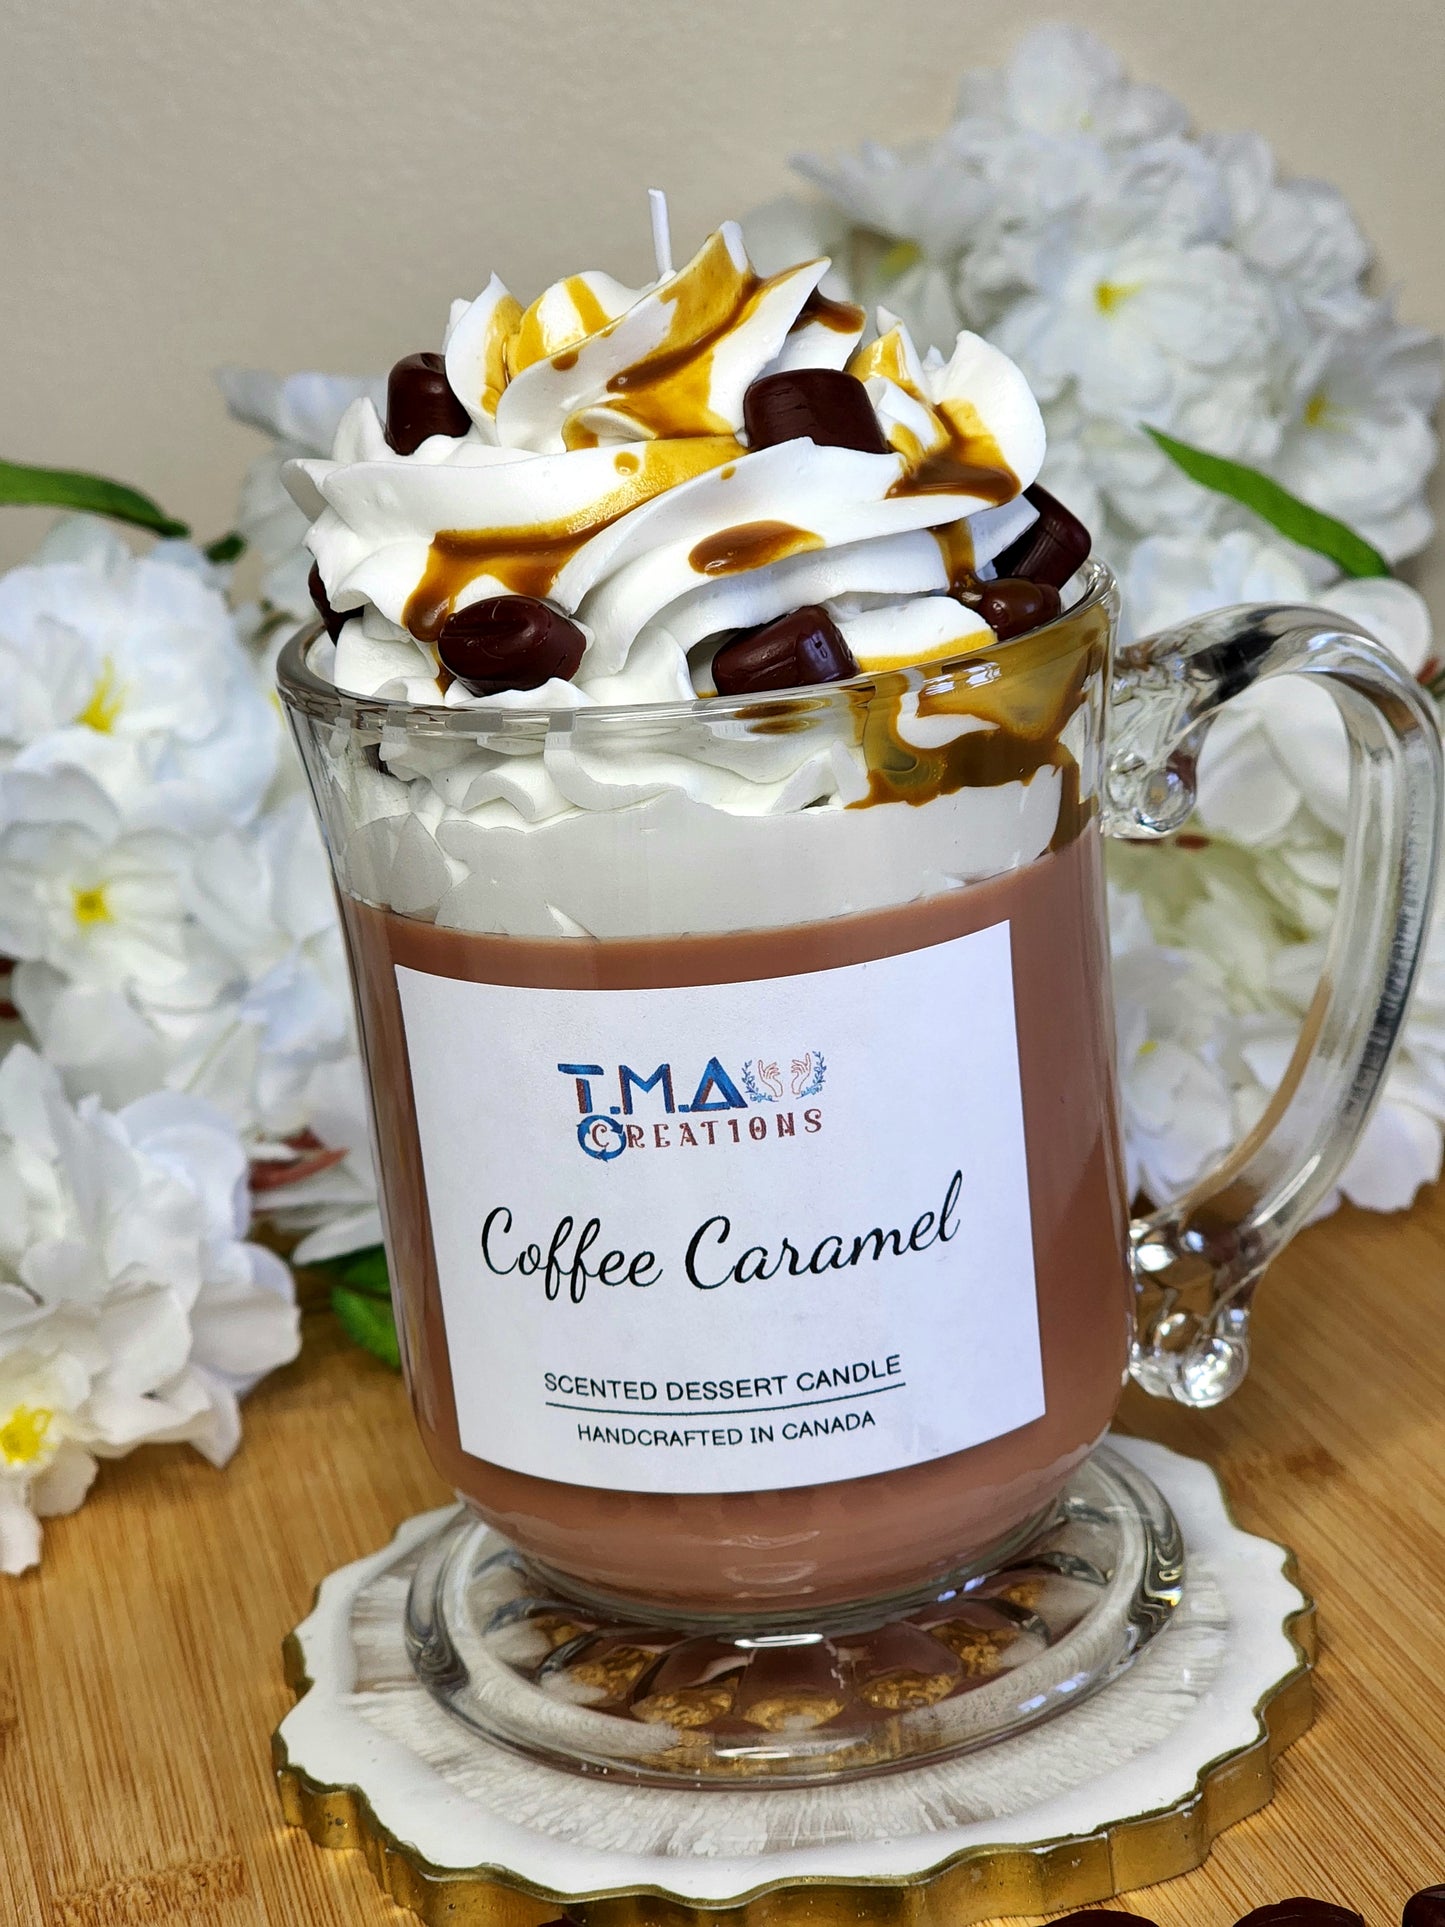 "Coffee Caramel" Dessert Candle